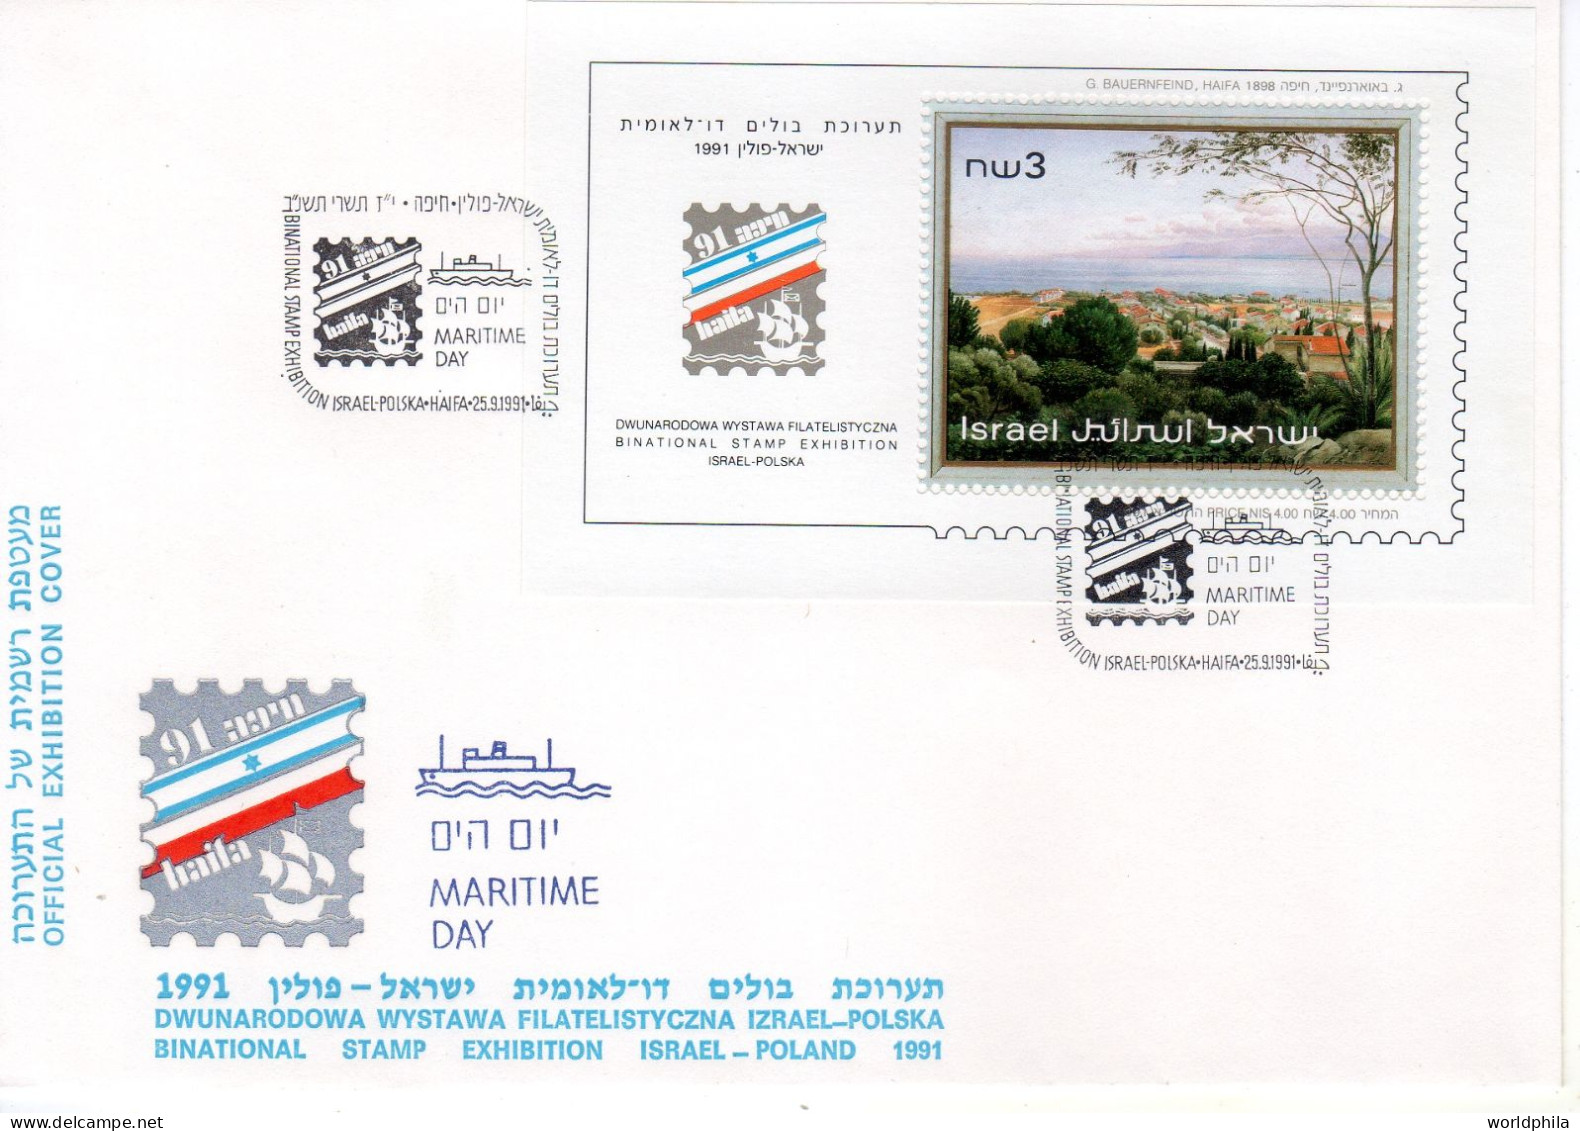 ISRAEL-Poland "Haifa 91" BiNational Stamp Exhibition Cacheted Cover "German Colony" Painting Souvenir Sheet - Briefe U. Dokumente